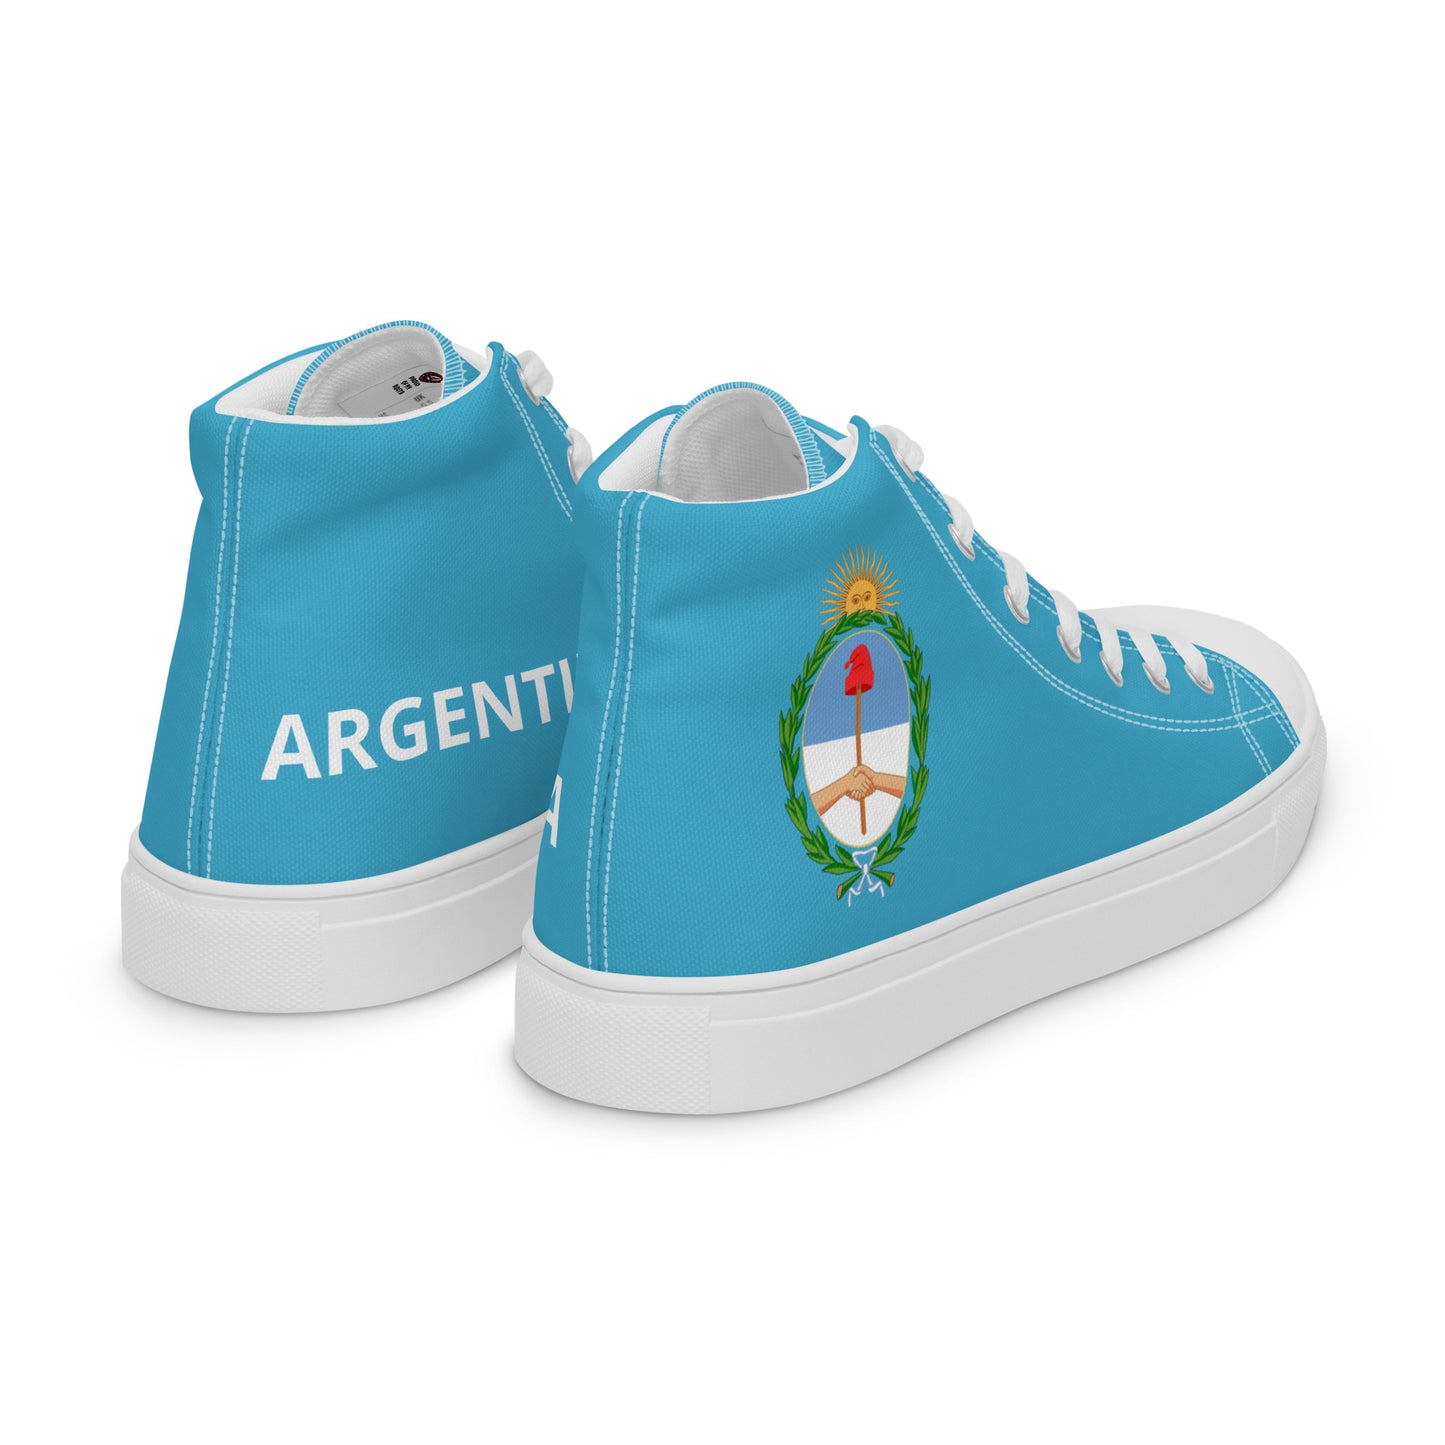 Argentina - Men - Sky - High top shoes